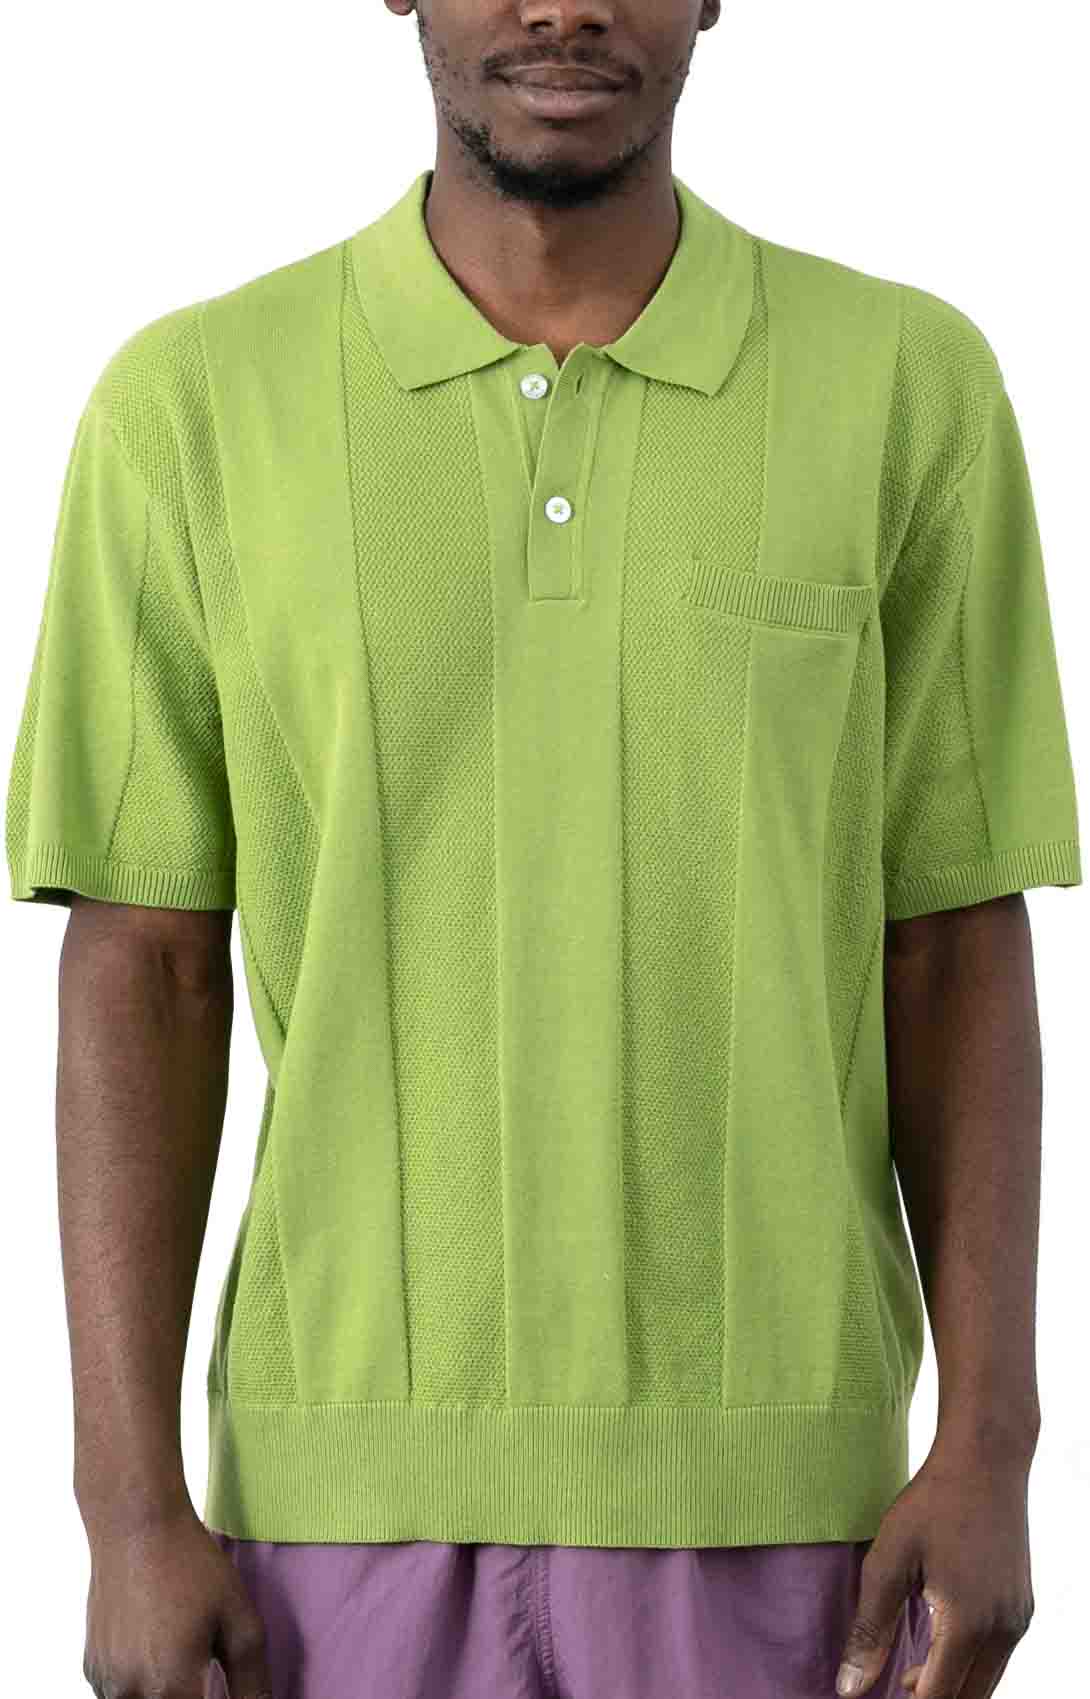 Alton Organic Shirt - Apple Buzz